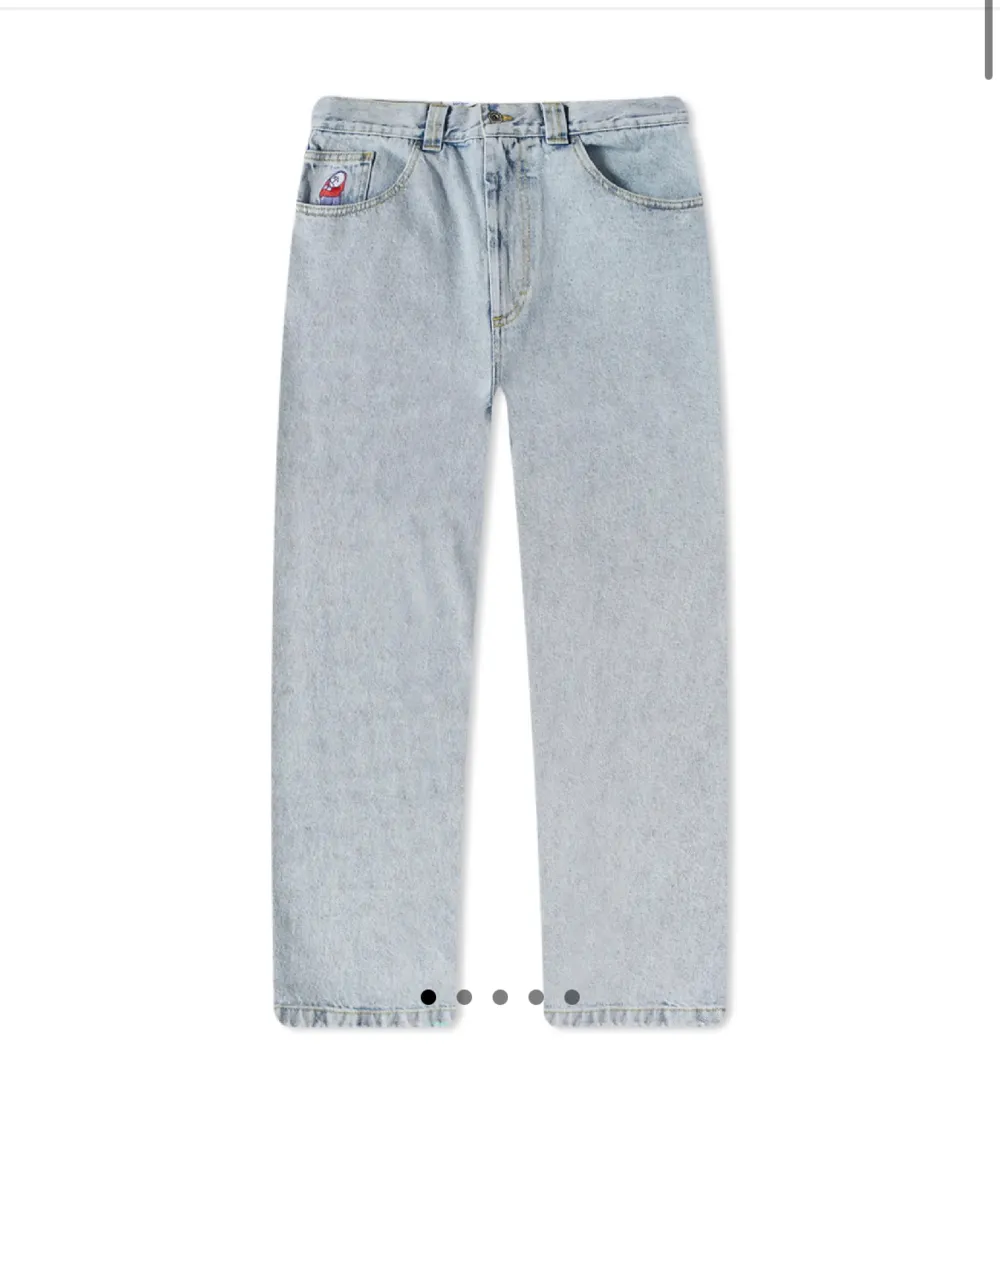 Raka big boy jeans från Junkyard i strl M💕. Jeans & Byxor.